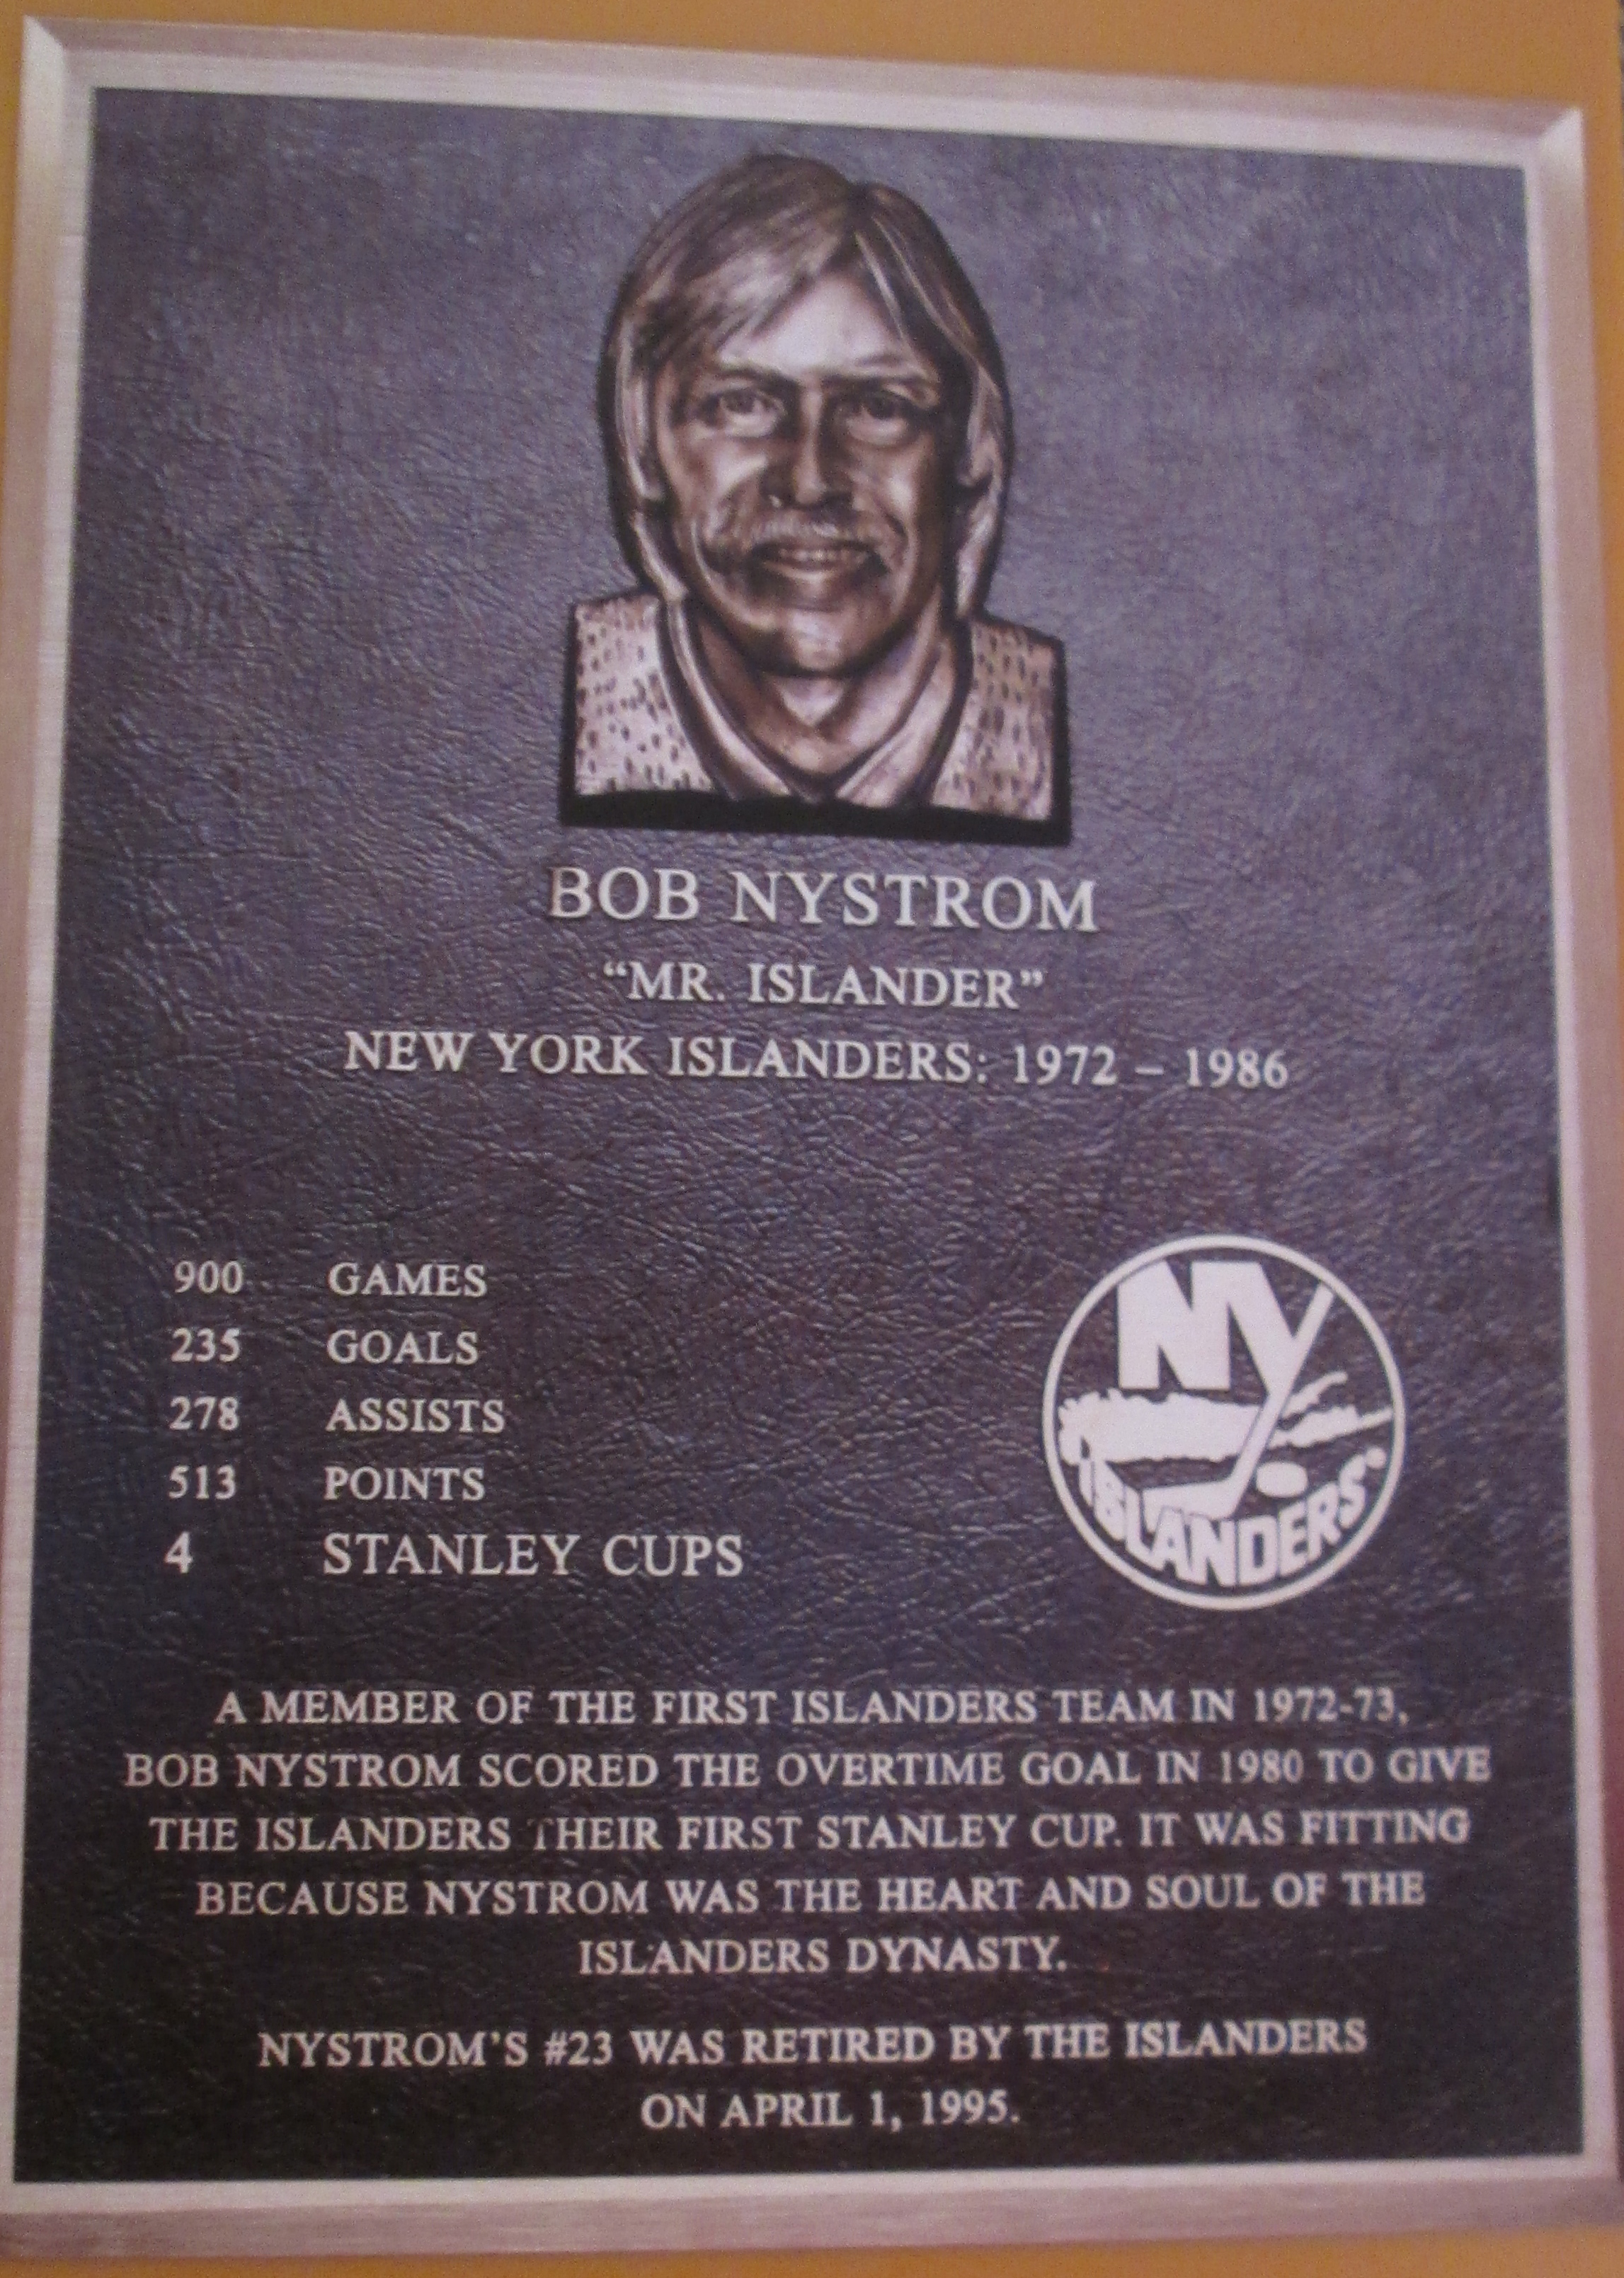 Bobby Nystrom's New York Islanders Hall of Fame plaque (Photo: Peter Schwartz)